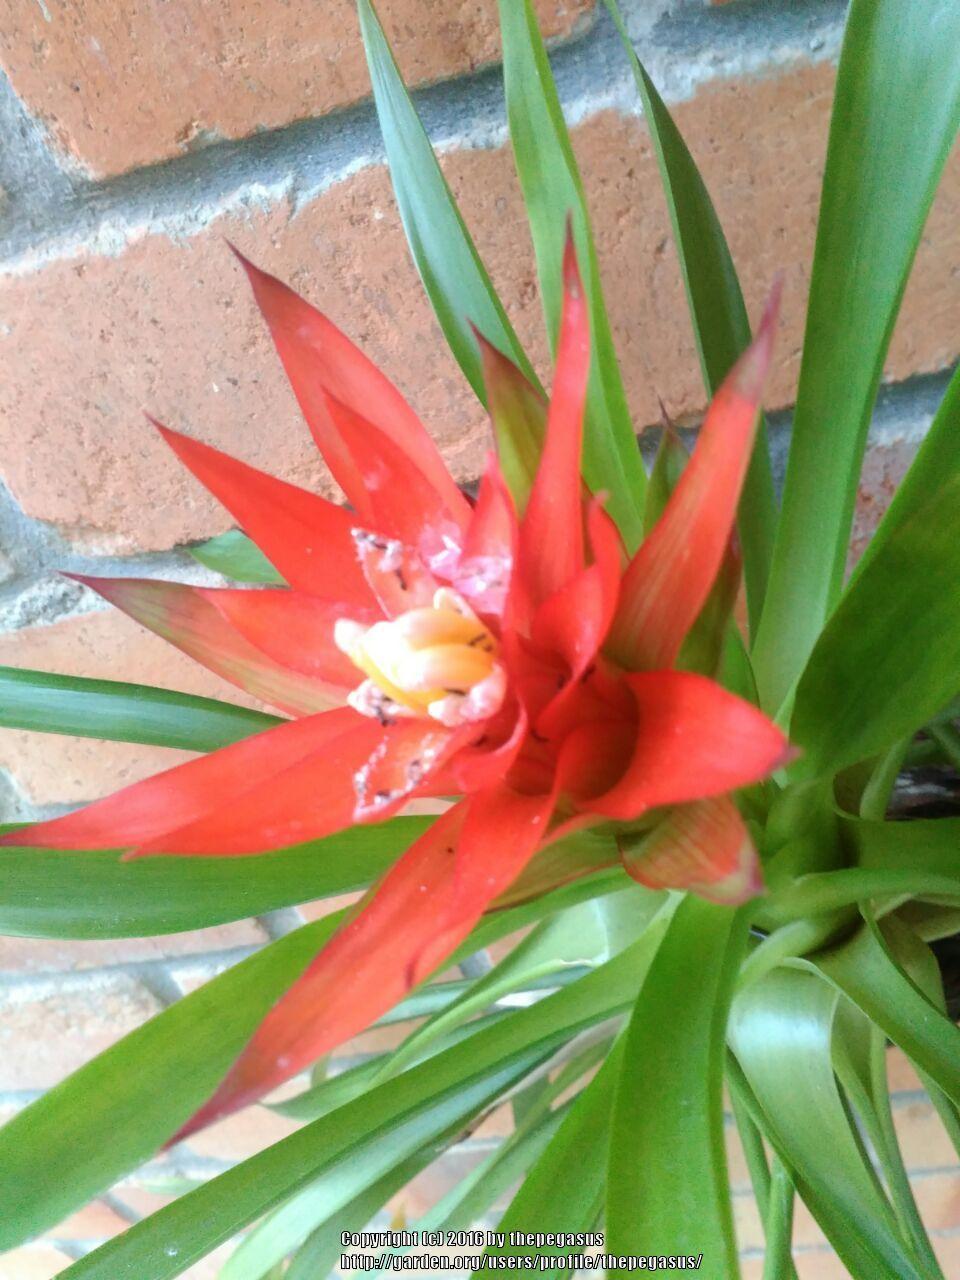 Photo of Scarlet Star (Guzmania lingulata) uploaded by thepegasus